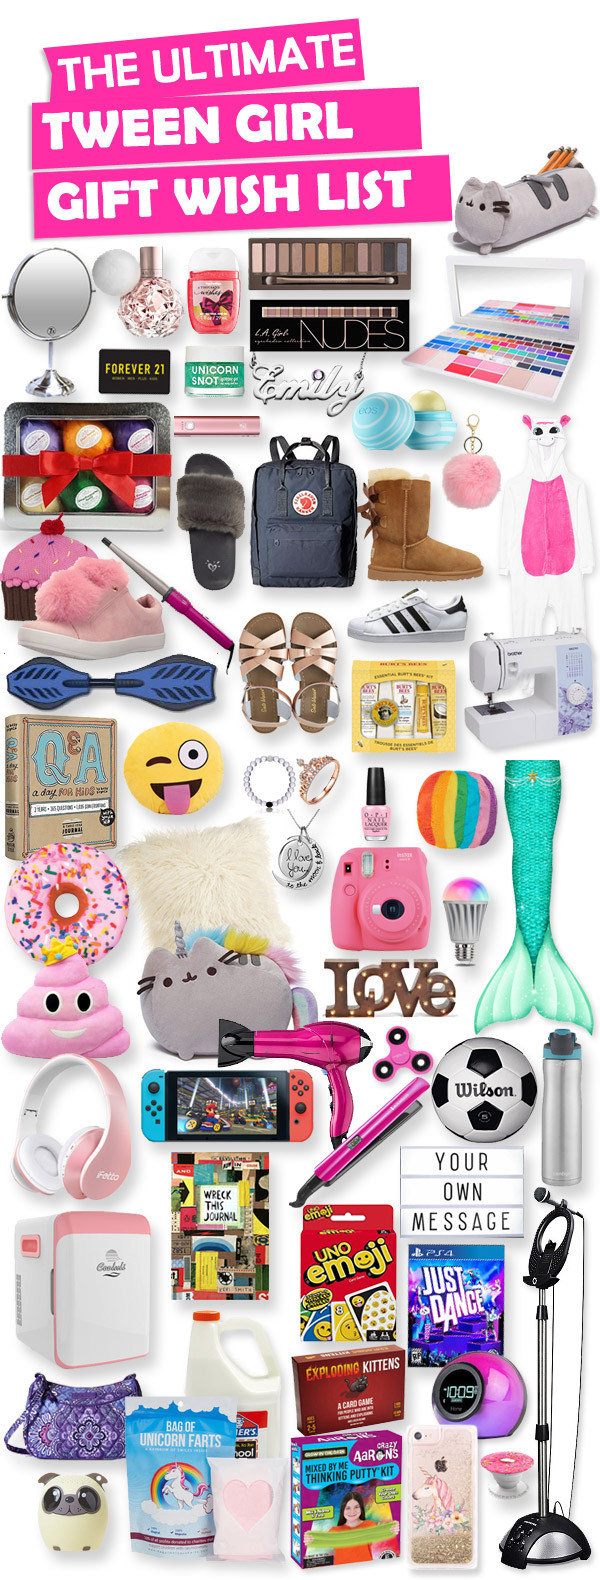 Tween Girl Birthday Gift Ideas
 Gifts For Tween Girls